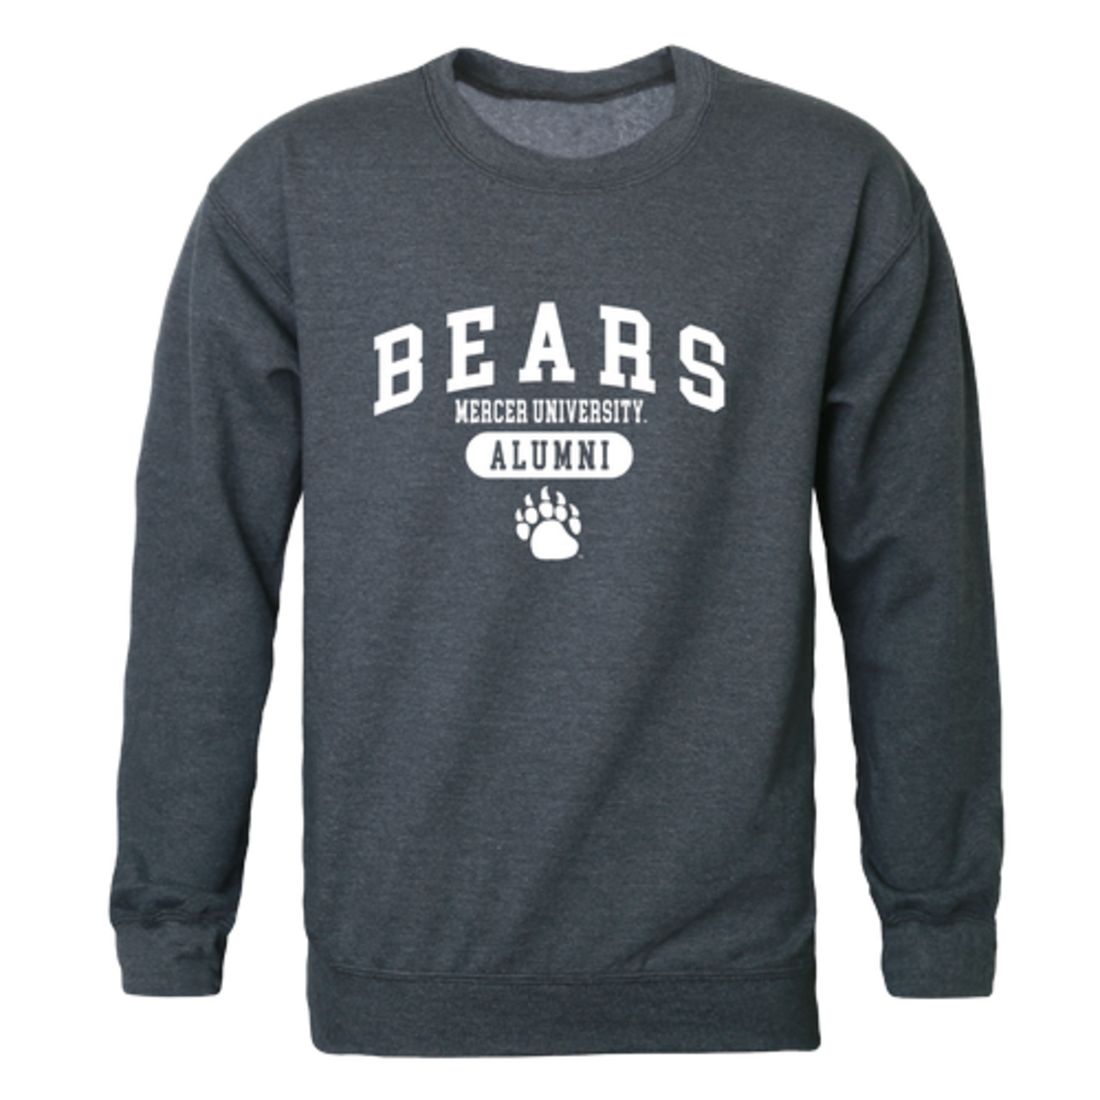 Mercer University Bears Alumni Fleece Crewneck Pullover Sweatshirt Heather Charcoal-Campus-Wardrobe